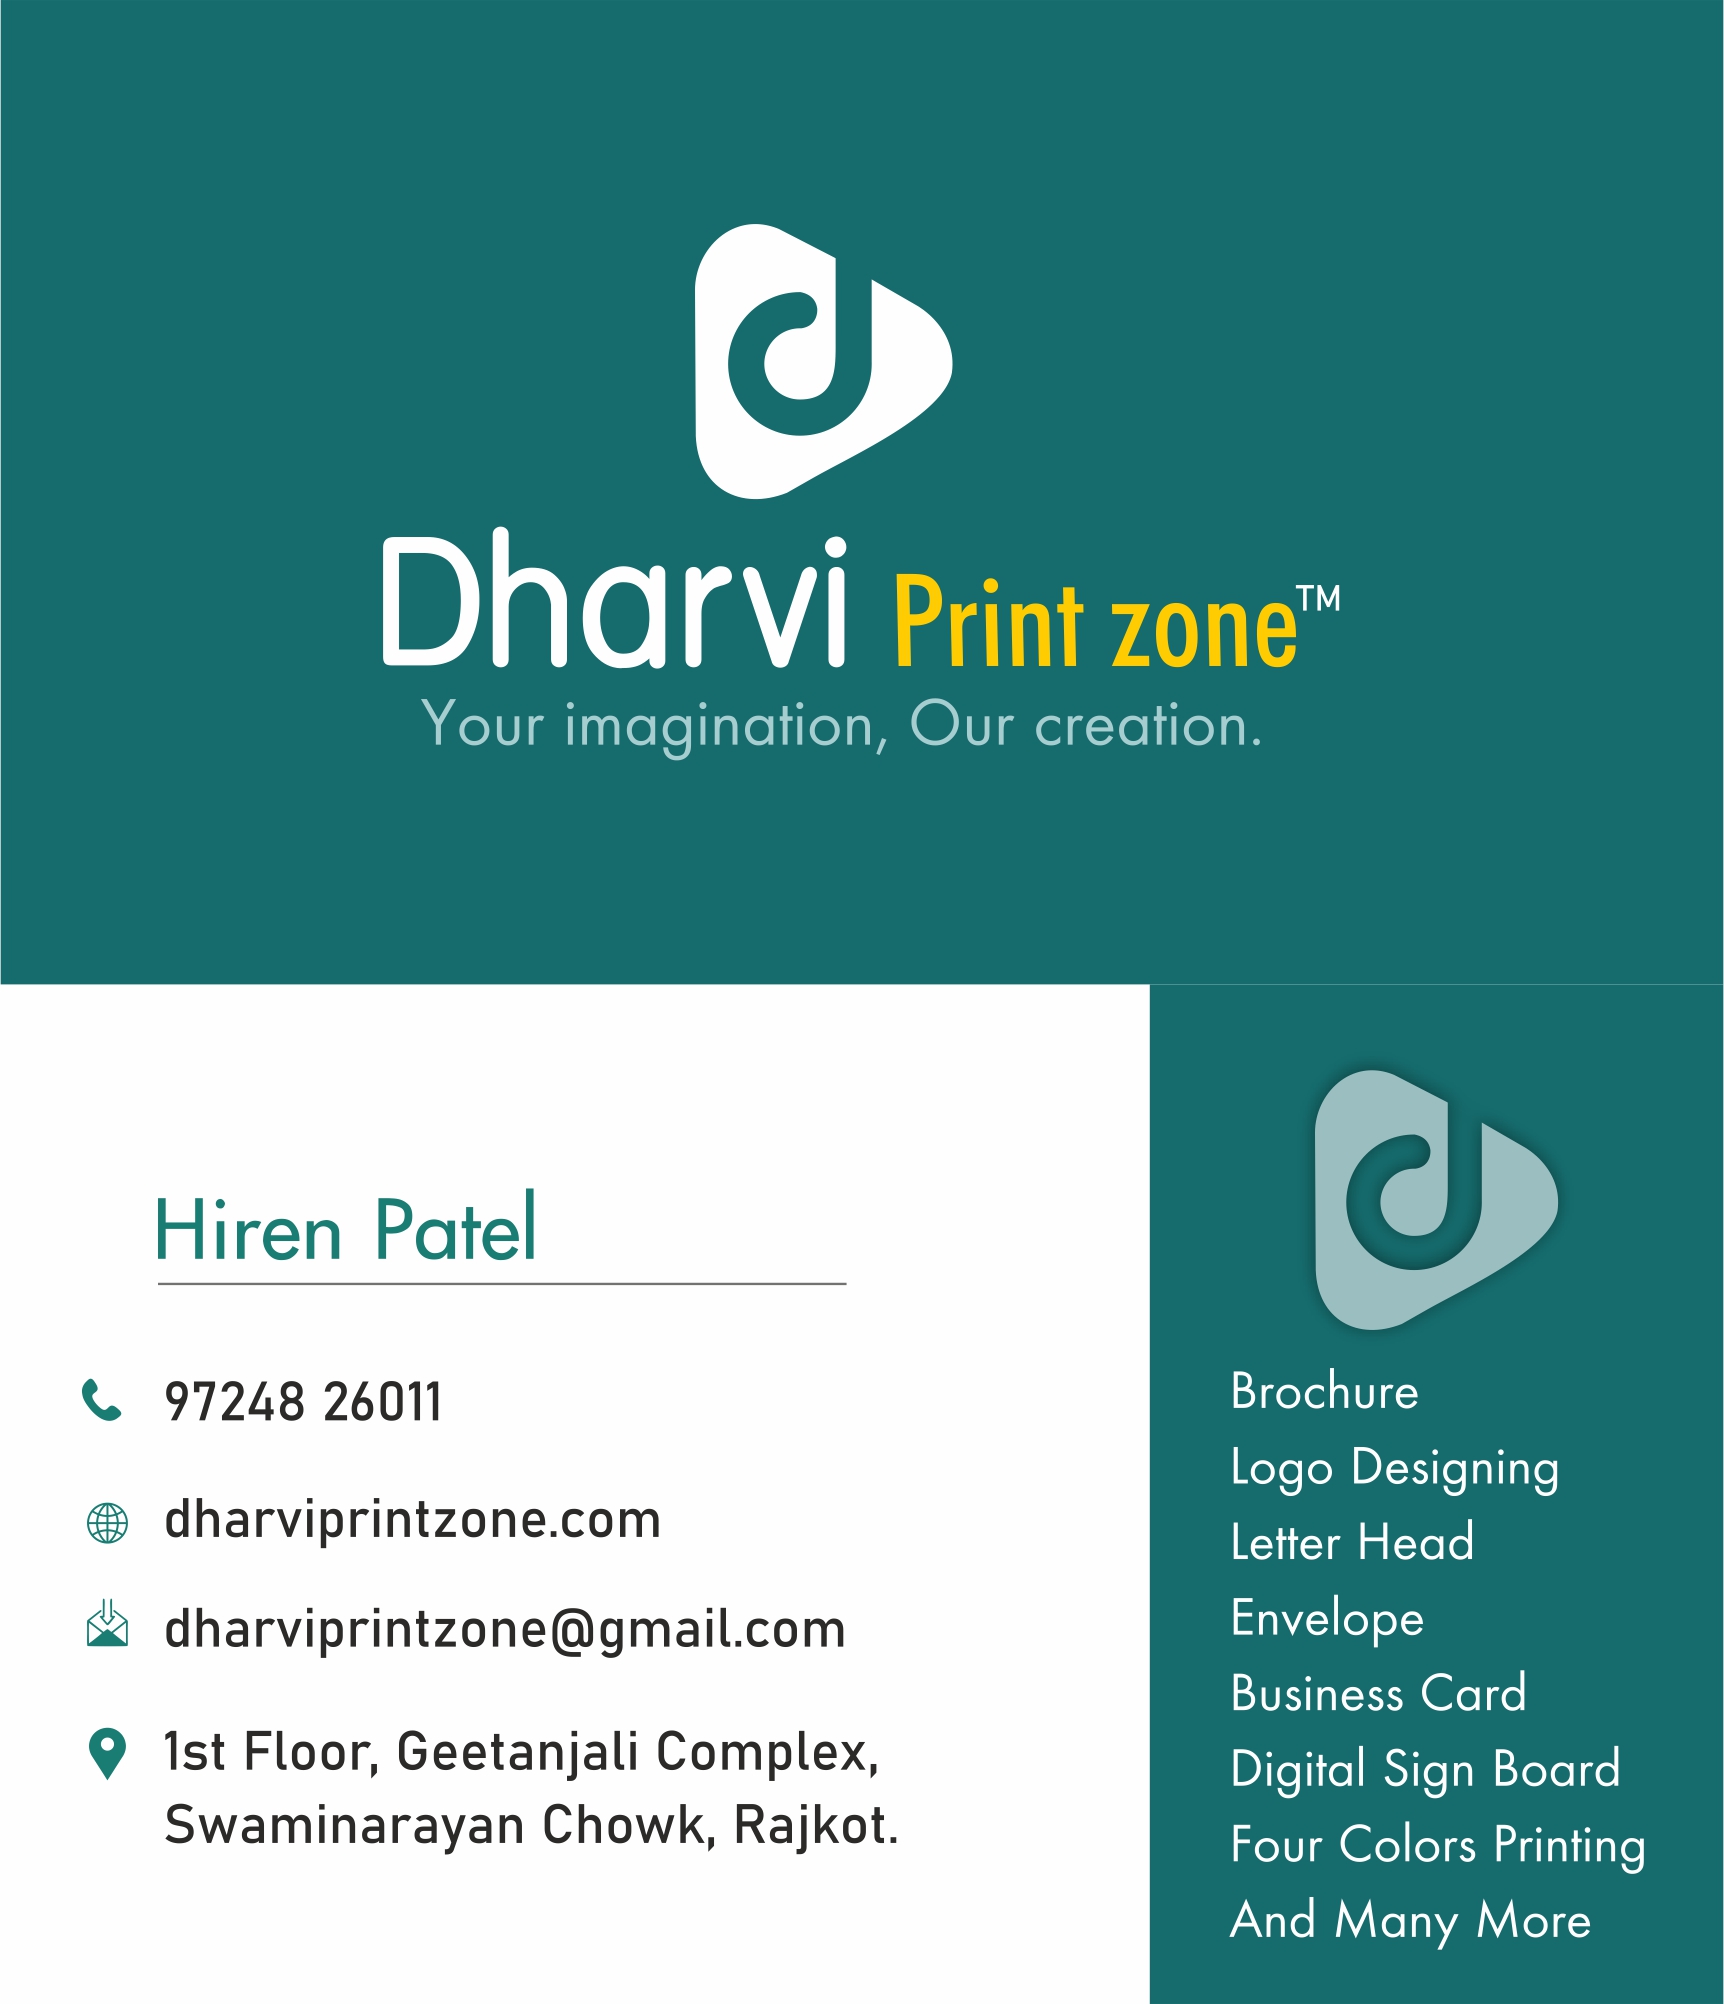 www.dharviprintzone.com